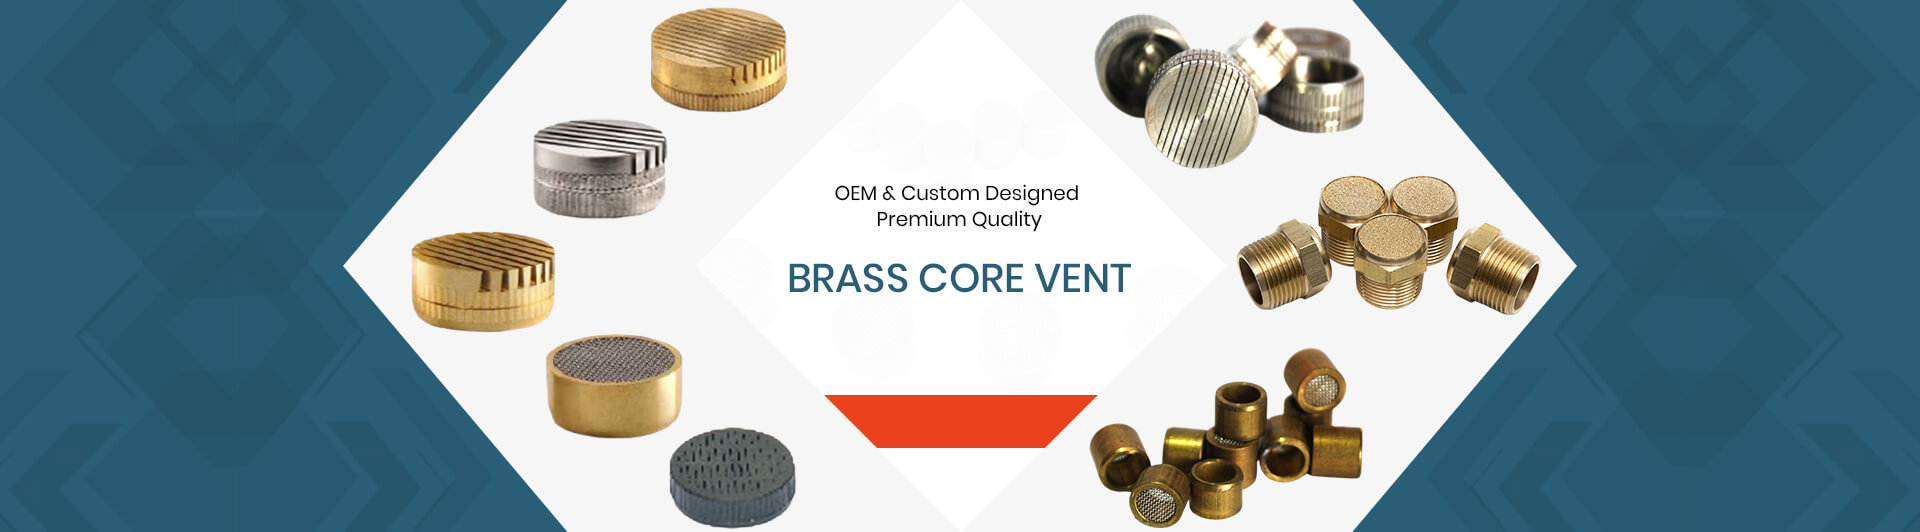 brass core vent supplier